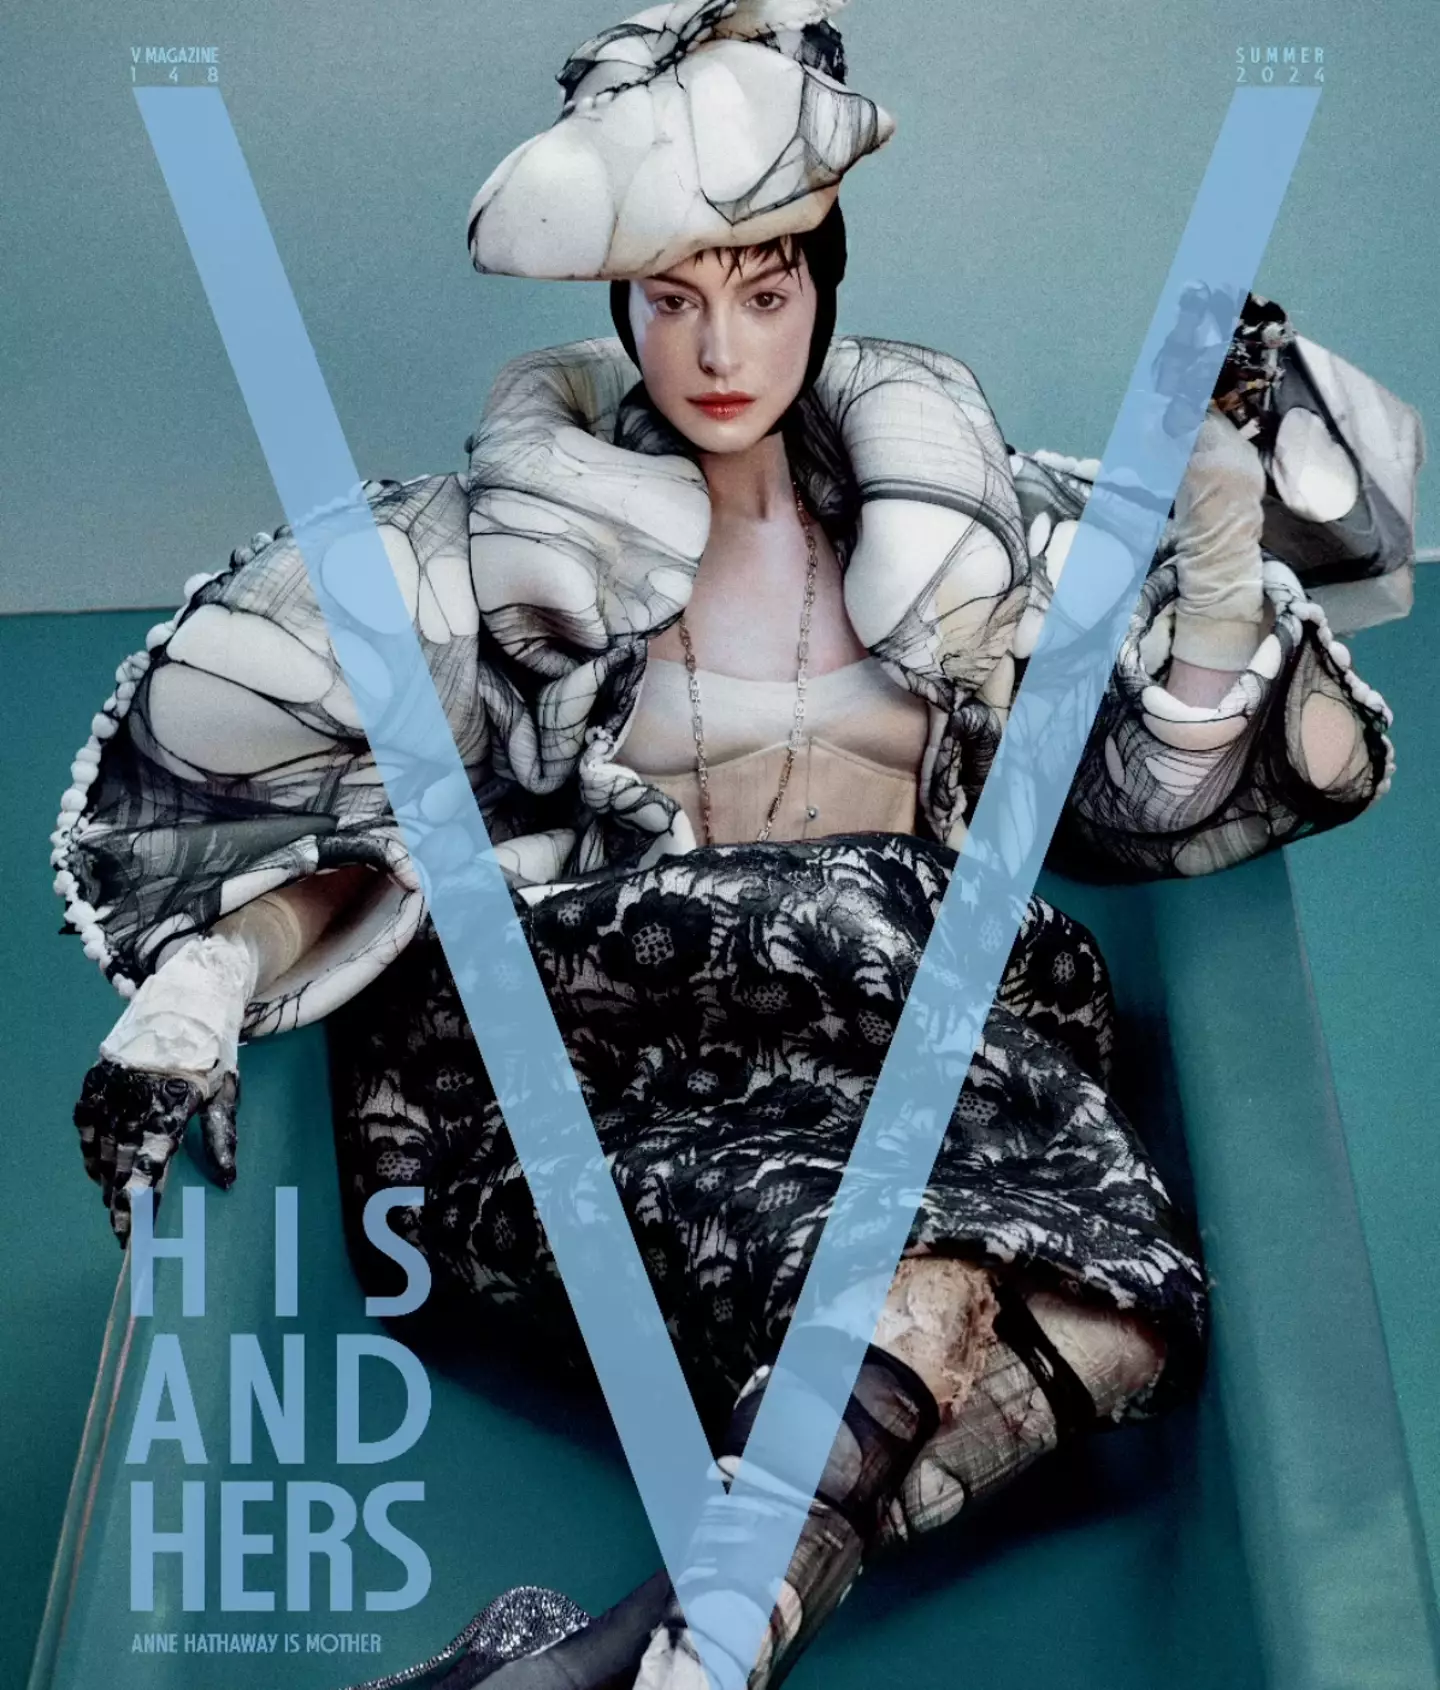 Anne Hathaway on the cover of V Magazine. (Chris Colls/V Magazine)